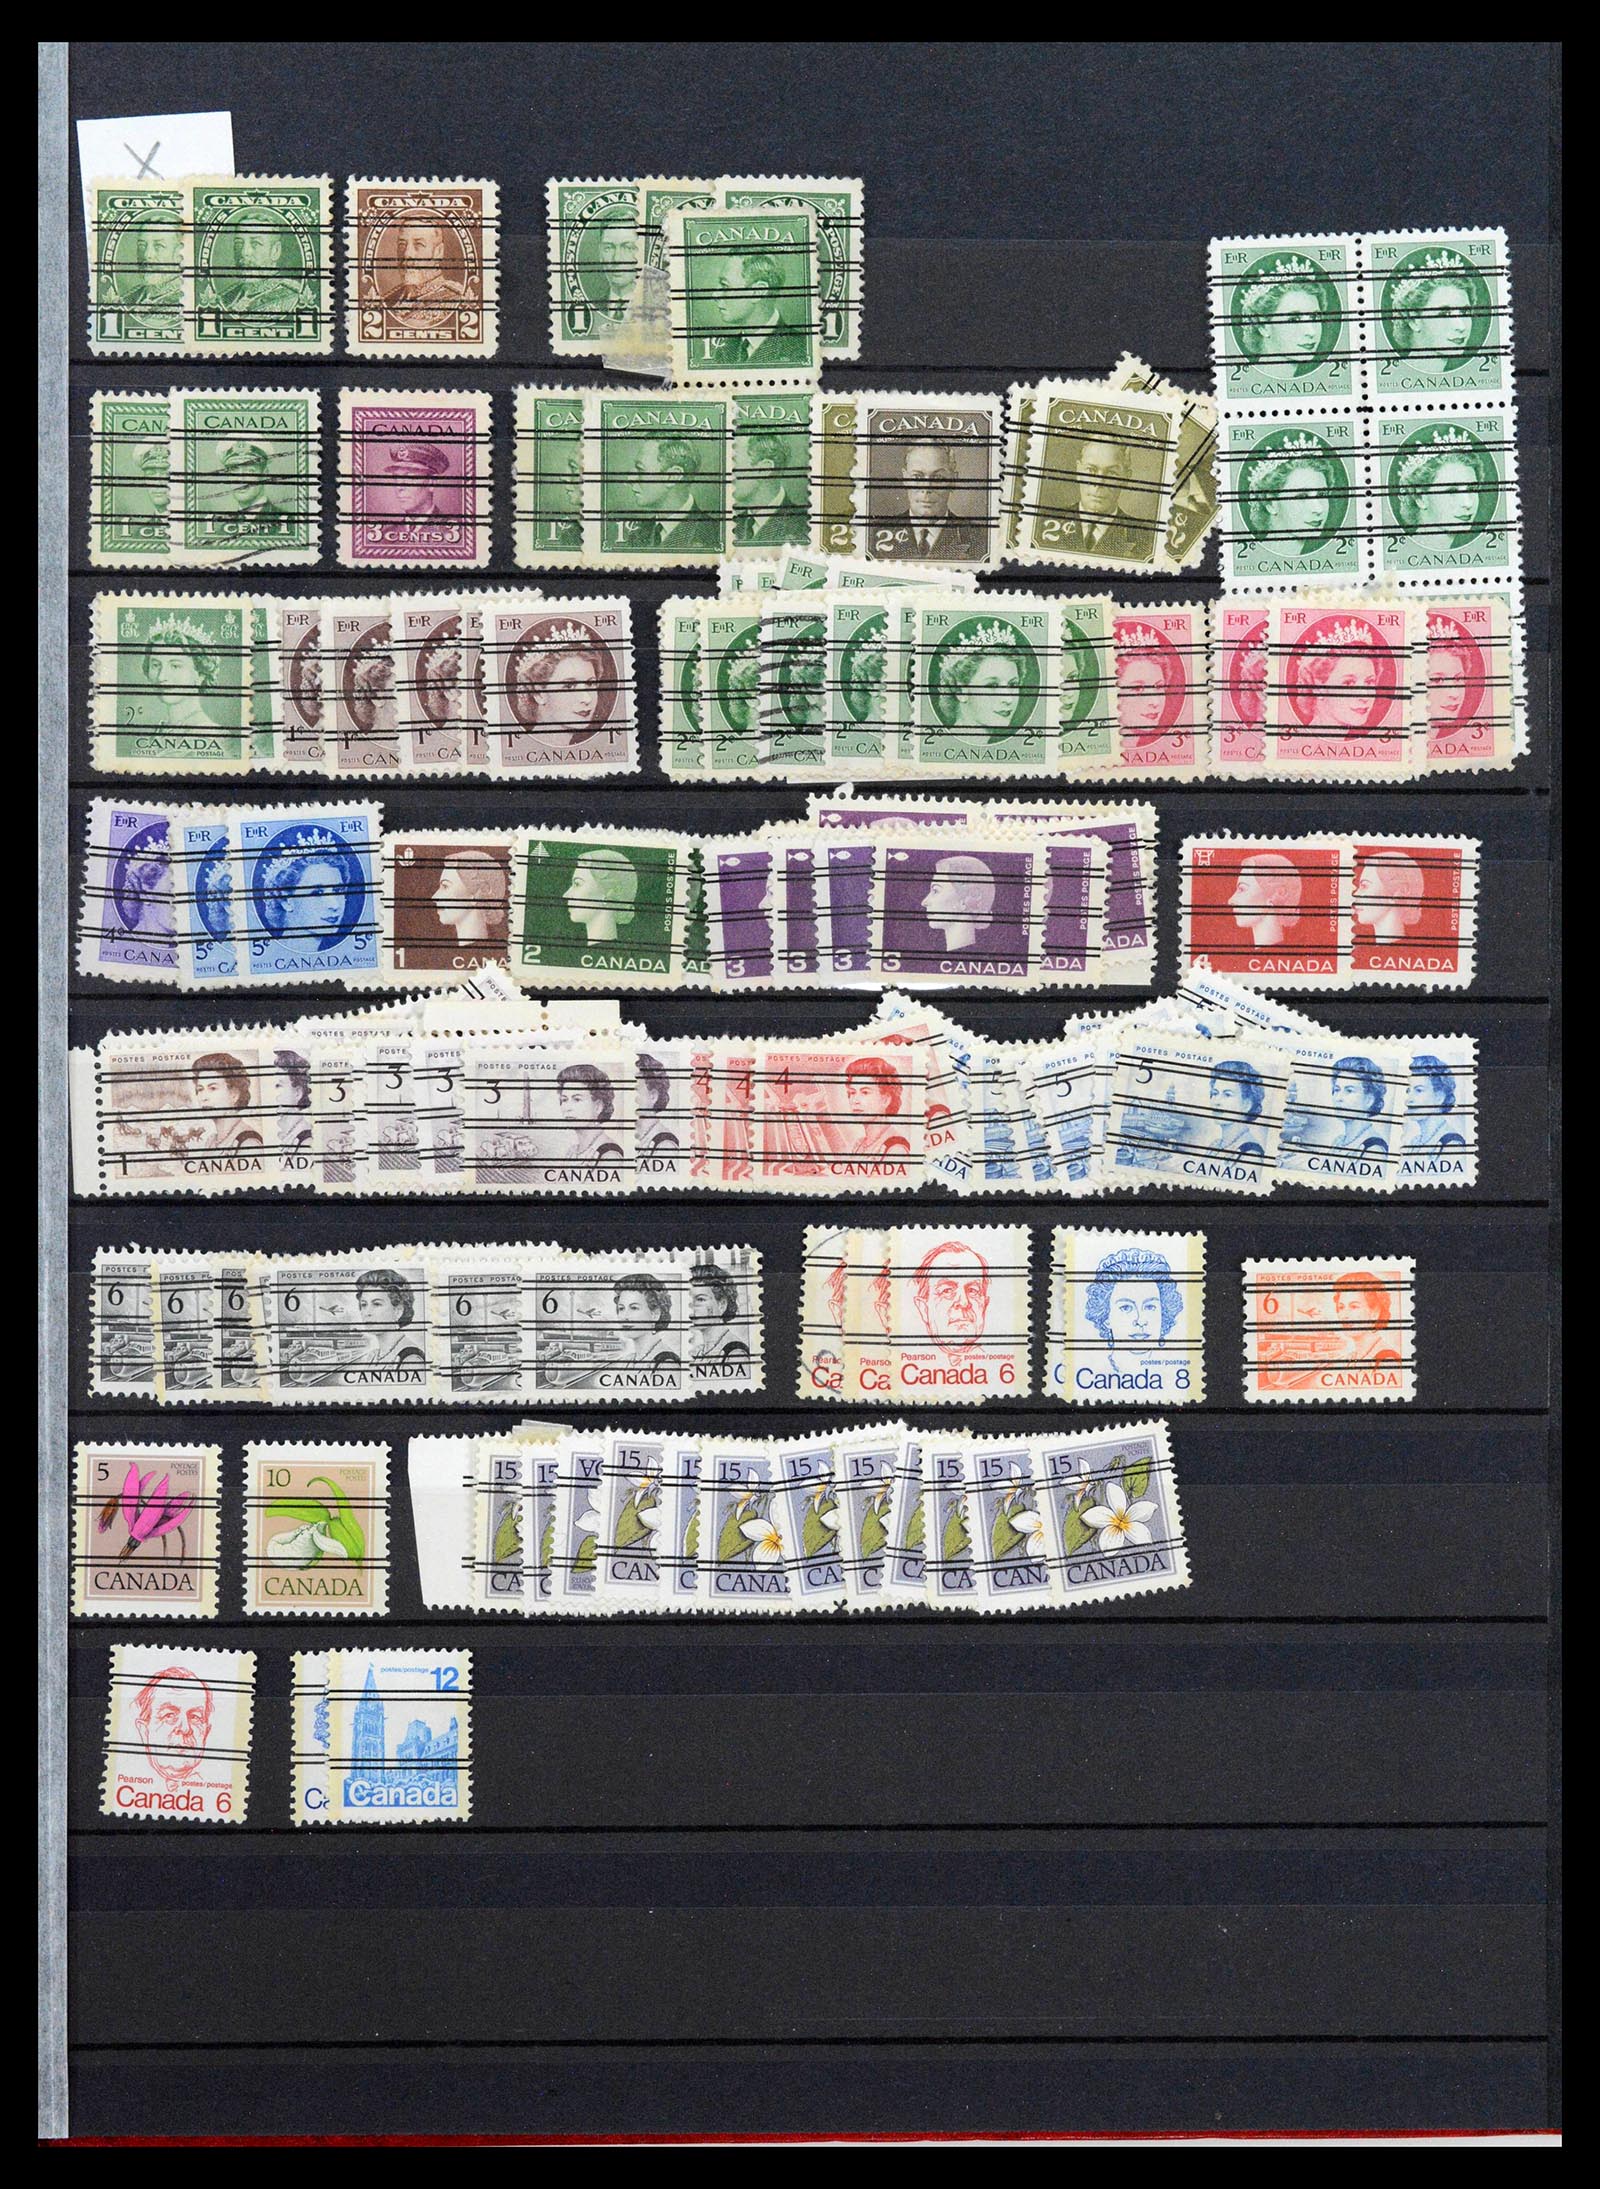 39484 0003 - Stamp collection 39484 Canada precancels 1880-1970.